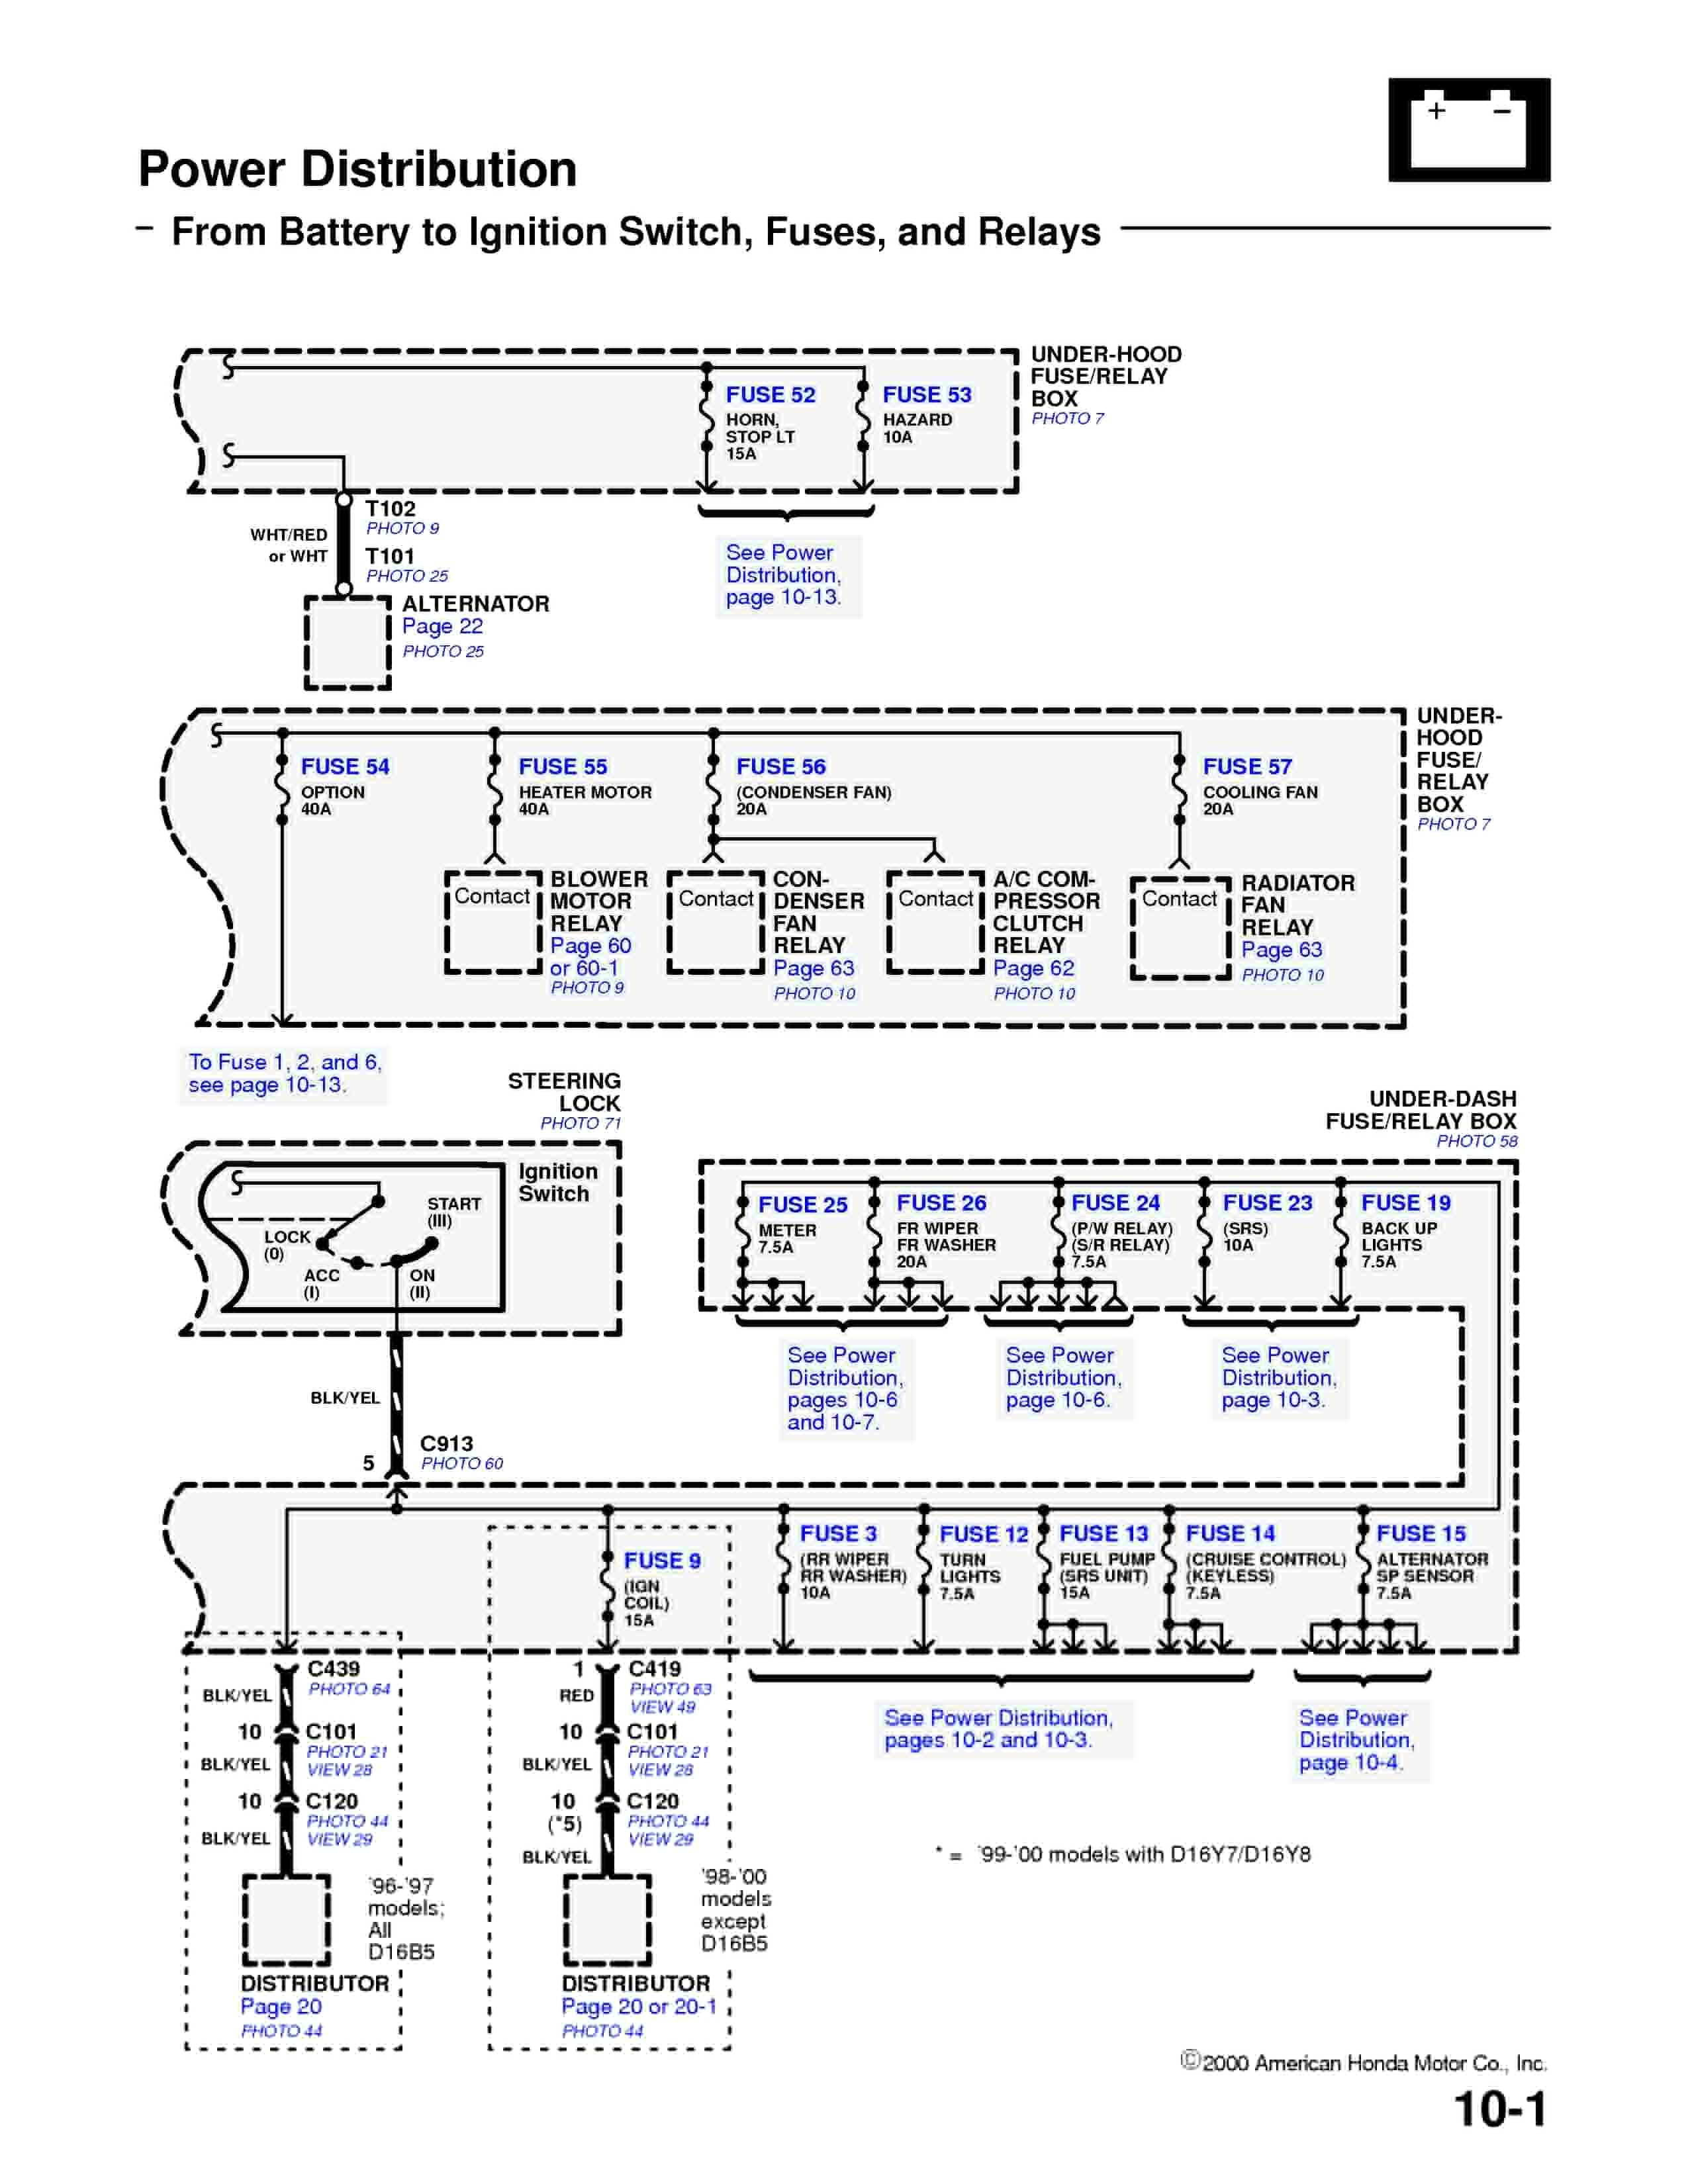 97 Honda Accord Transmission Diagram 1997 Honda Civic Ignition Switch Wiring Diagram Of 97 Honda Accord Transmission Diagram